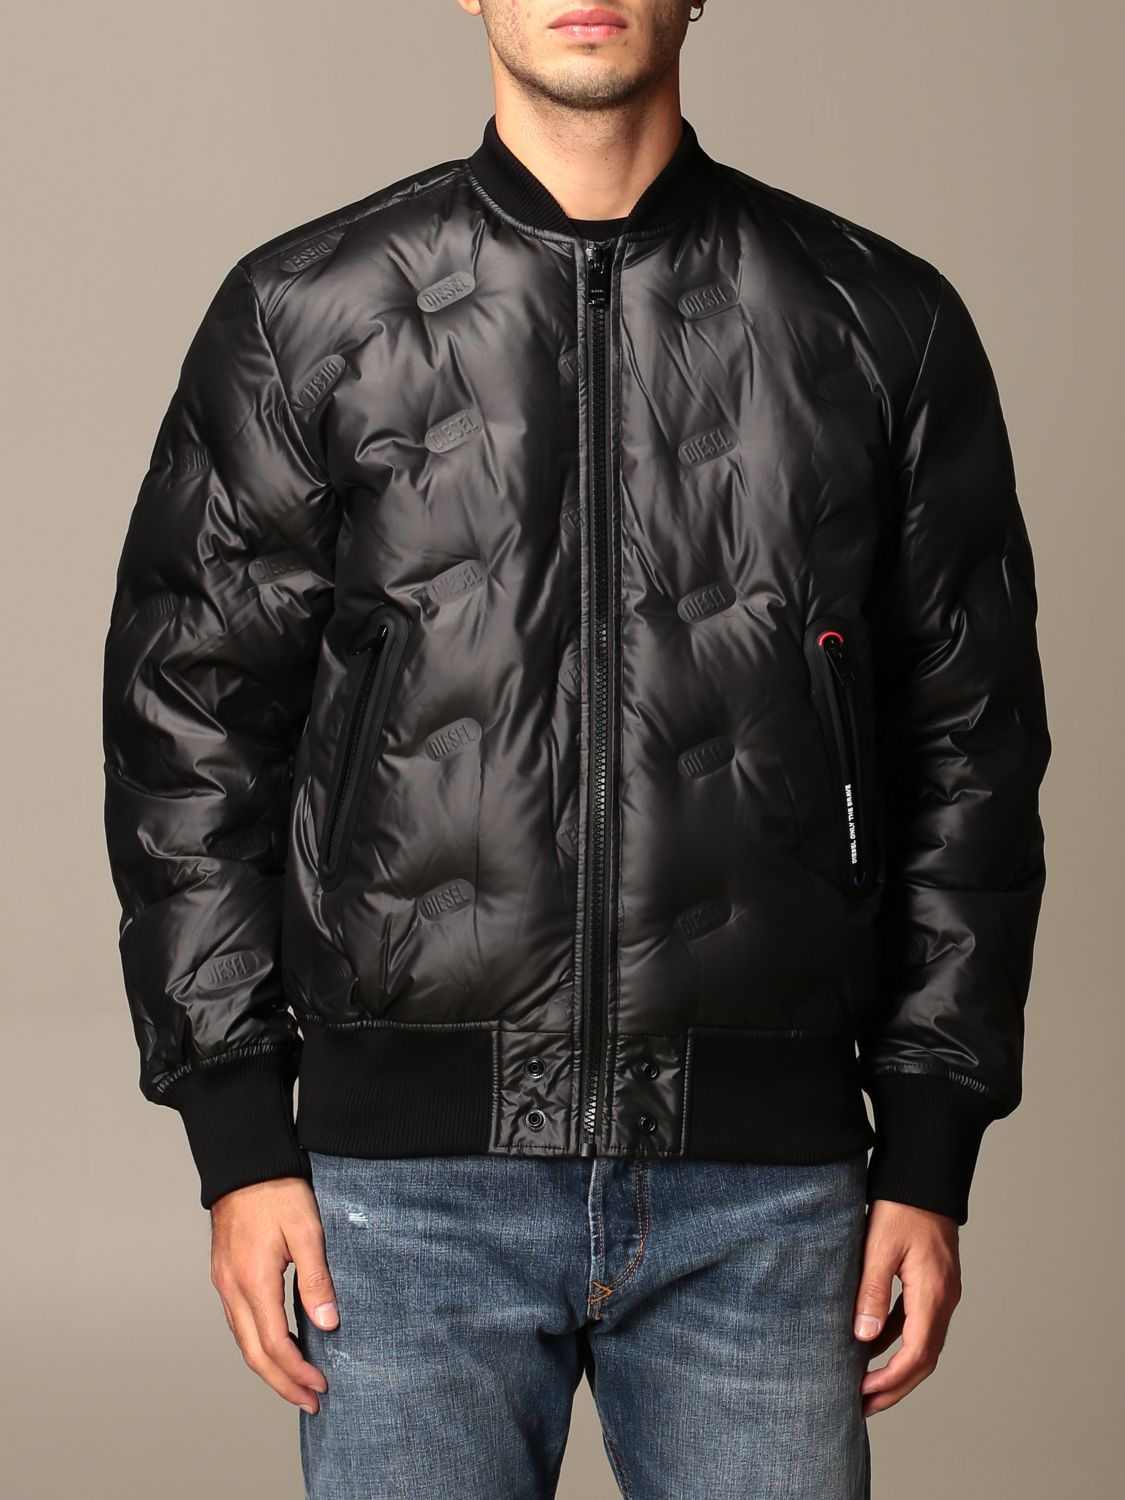 DIESEL: bomber jacket in quilted nylon - Black | Diesel jacket 0LAZX online on GIGLIO.COM